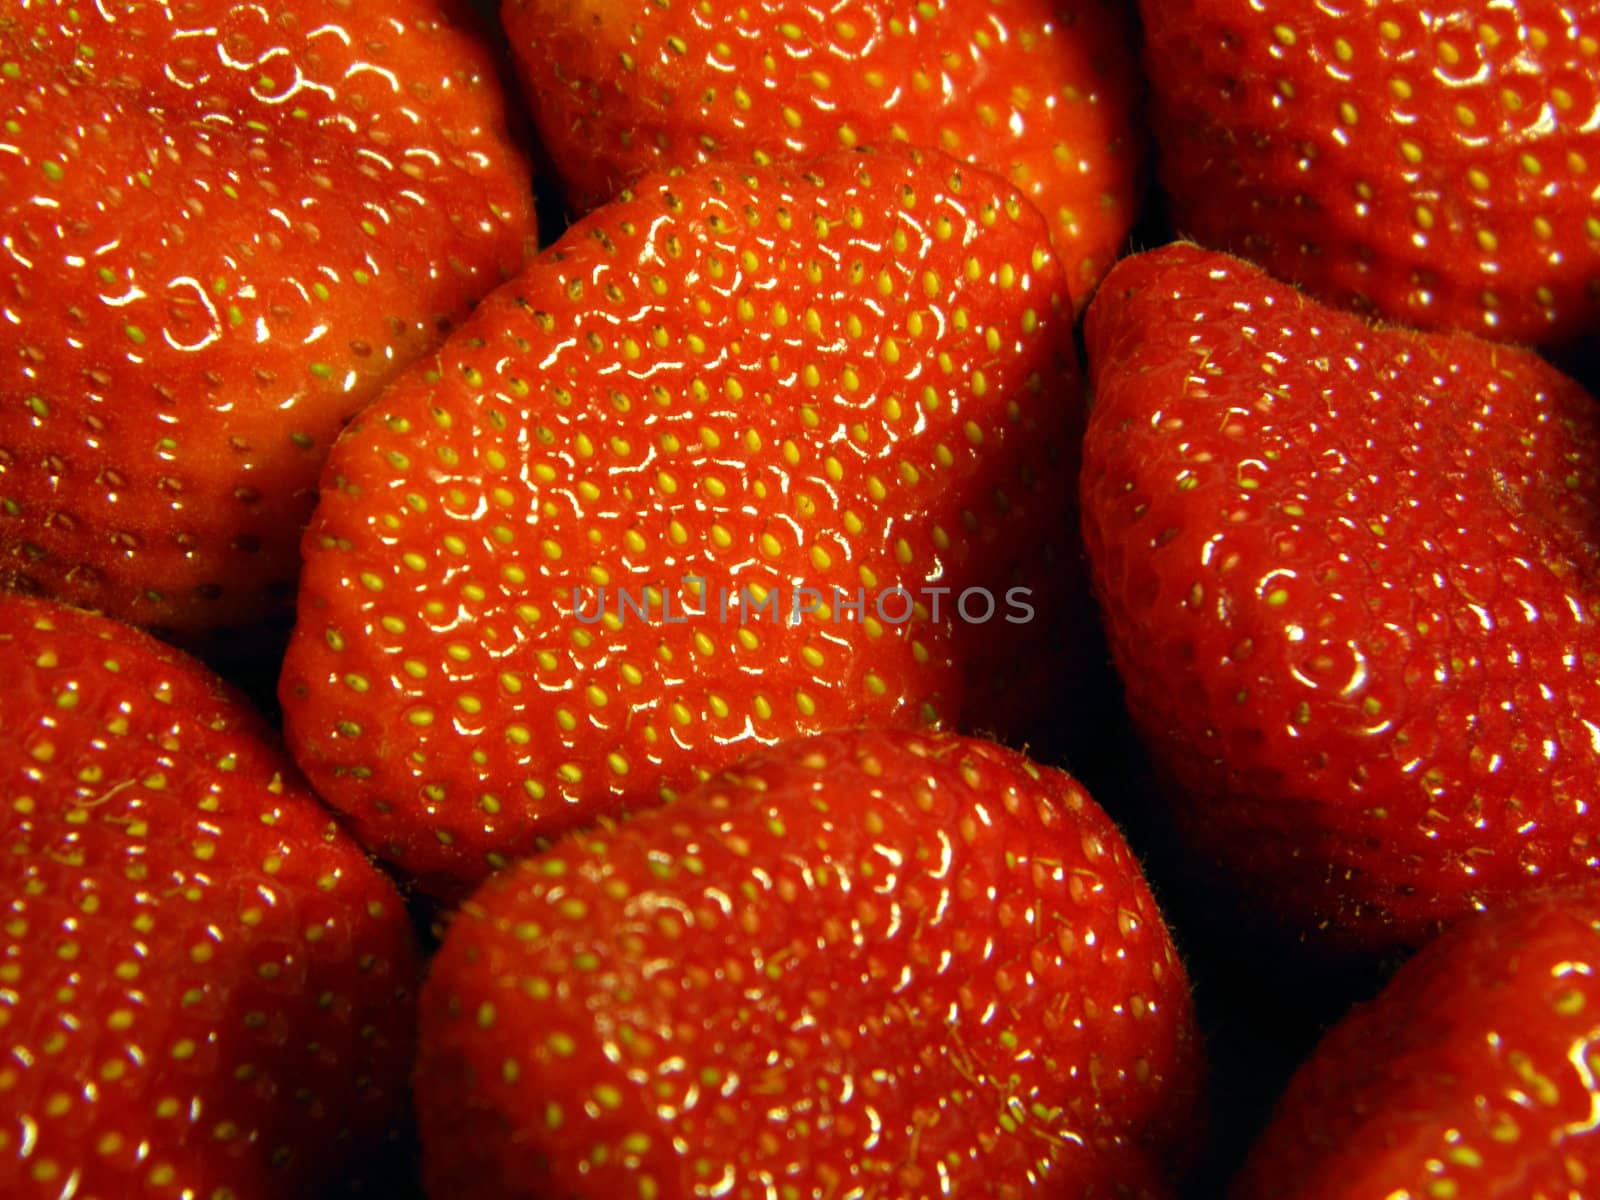 Close-up of Strawberry